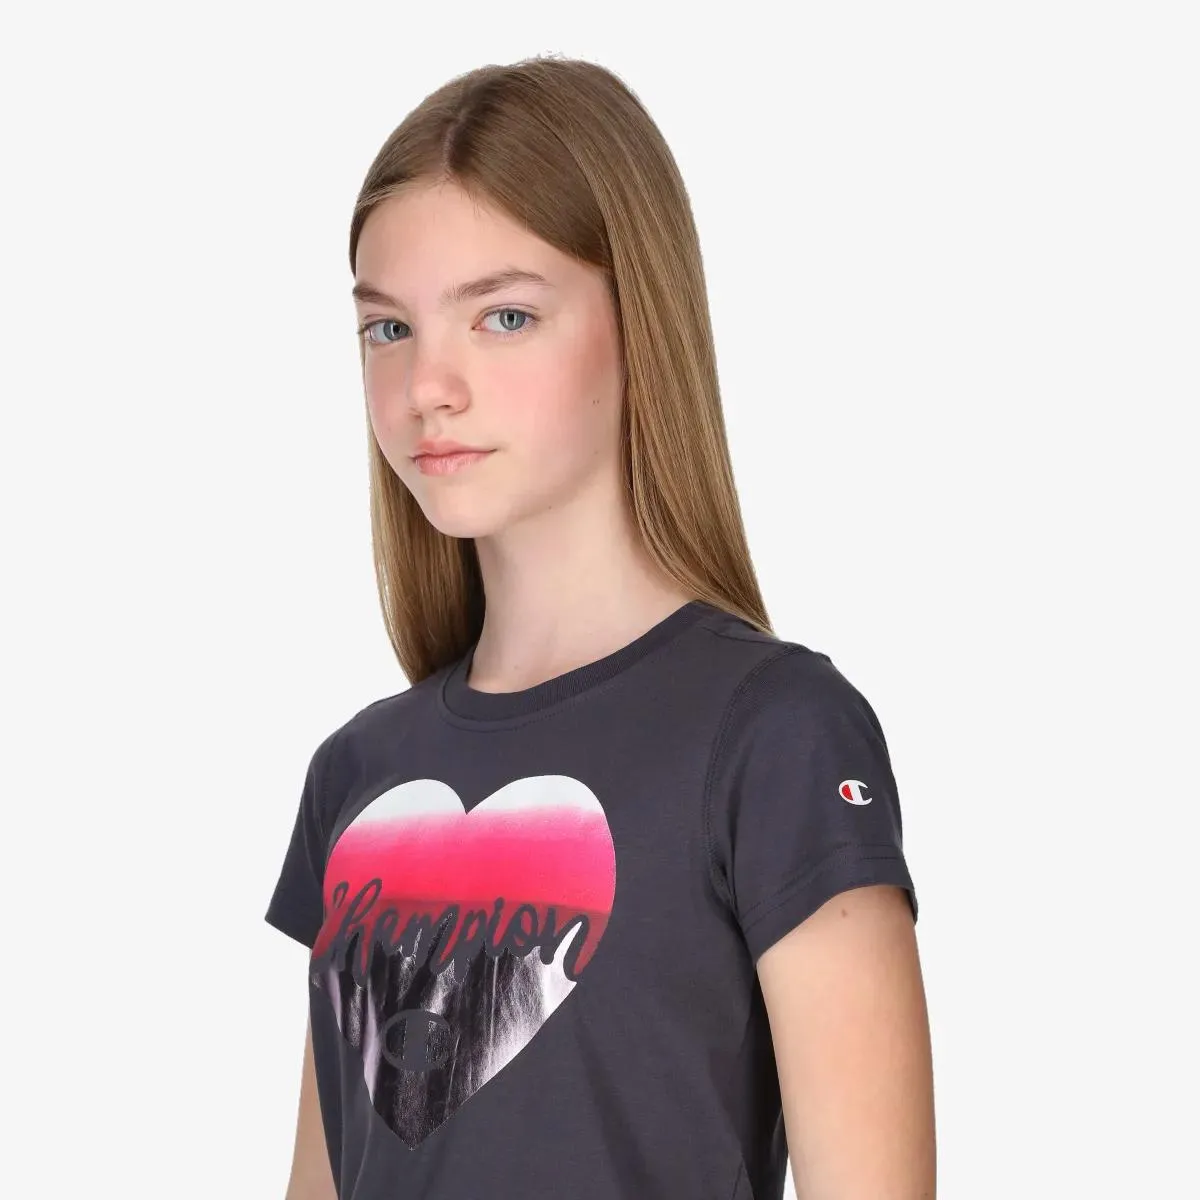 Champion T-shirt HEART 